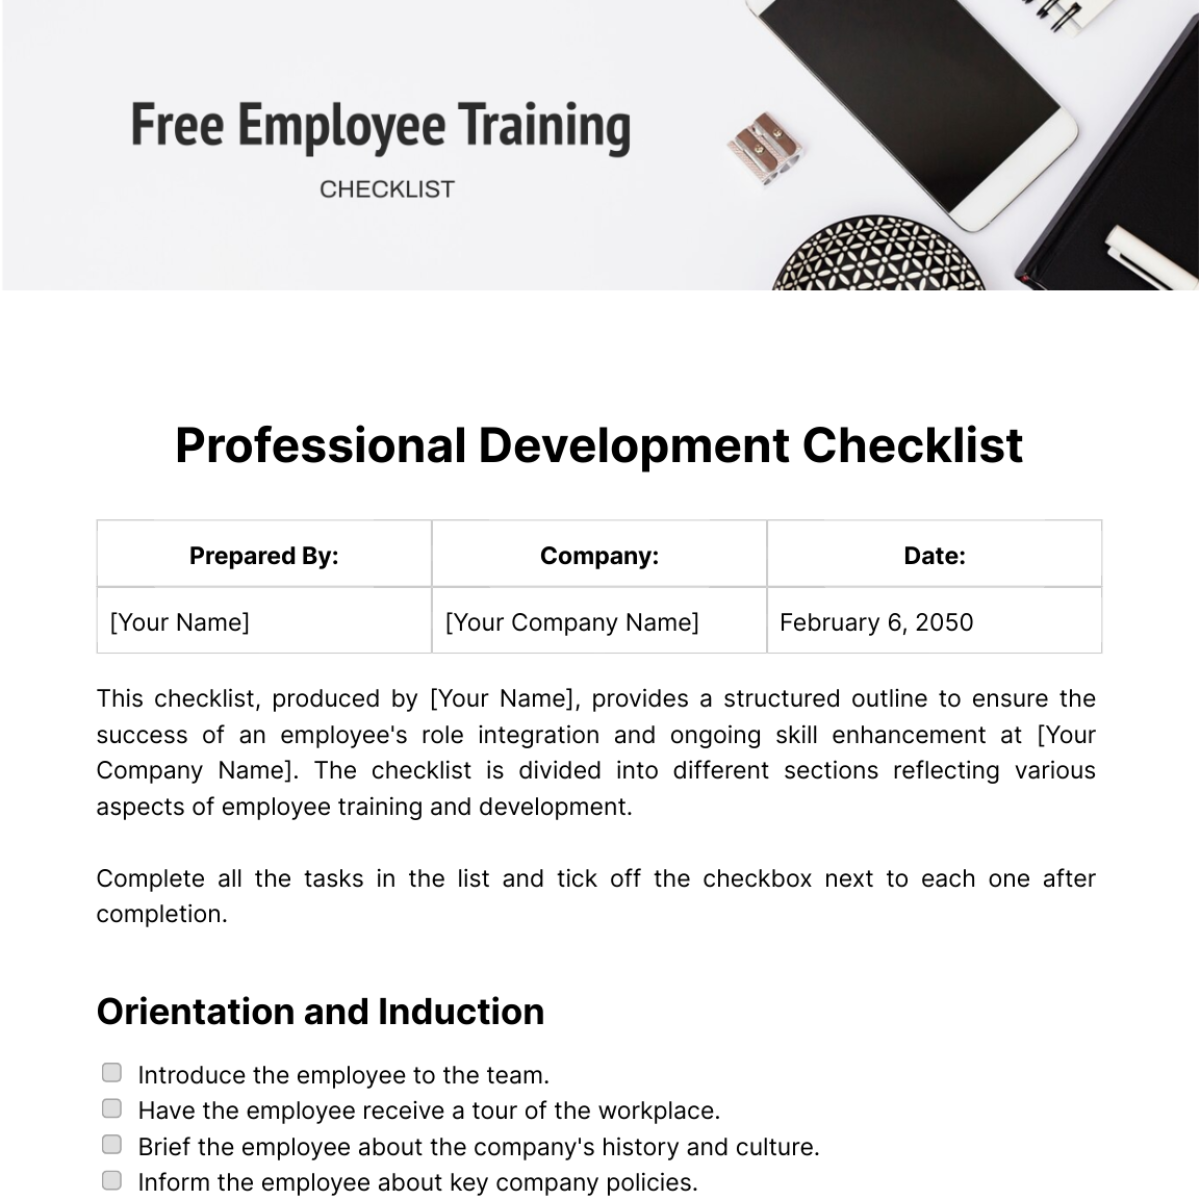 Free Employee Training Checklist Template